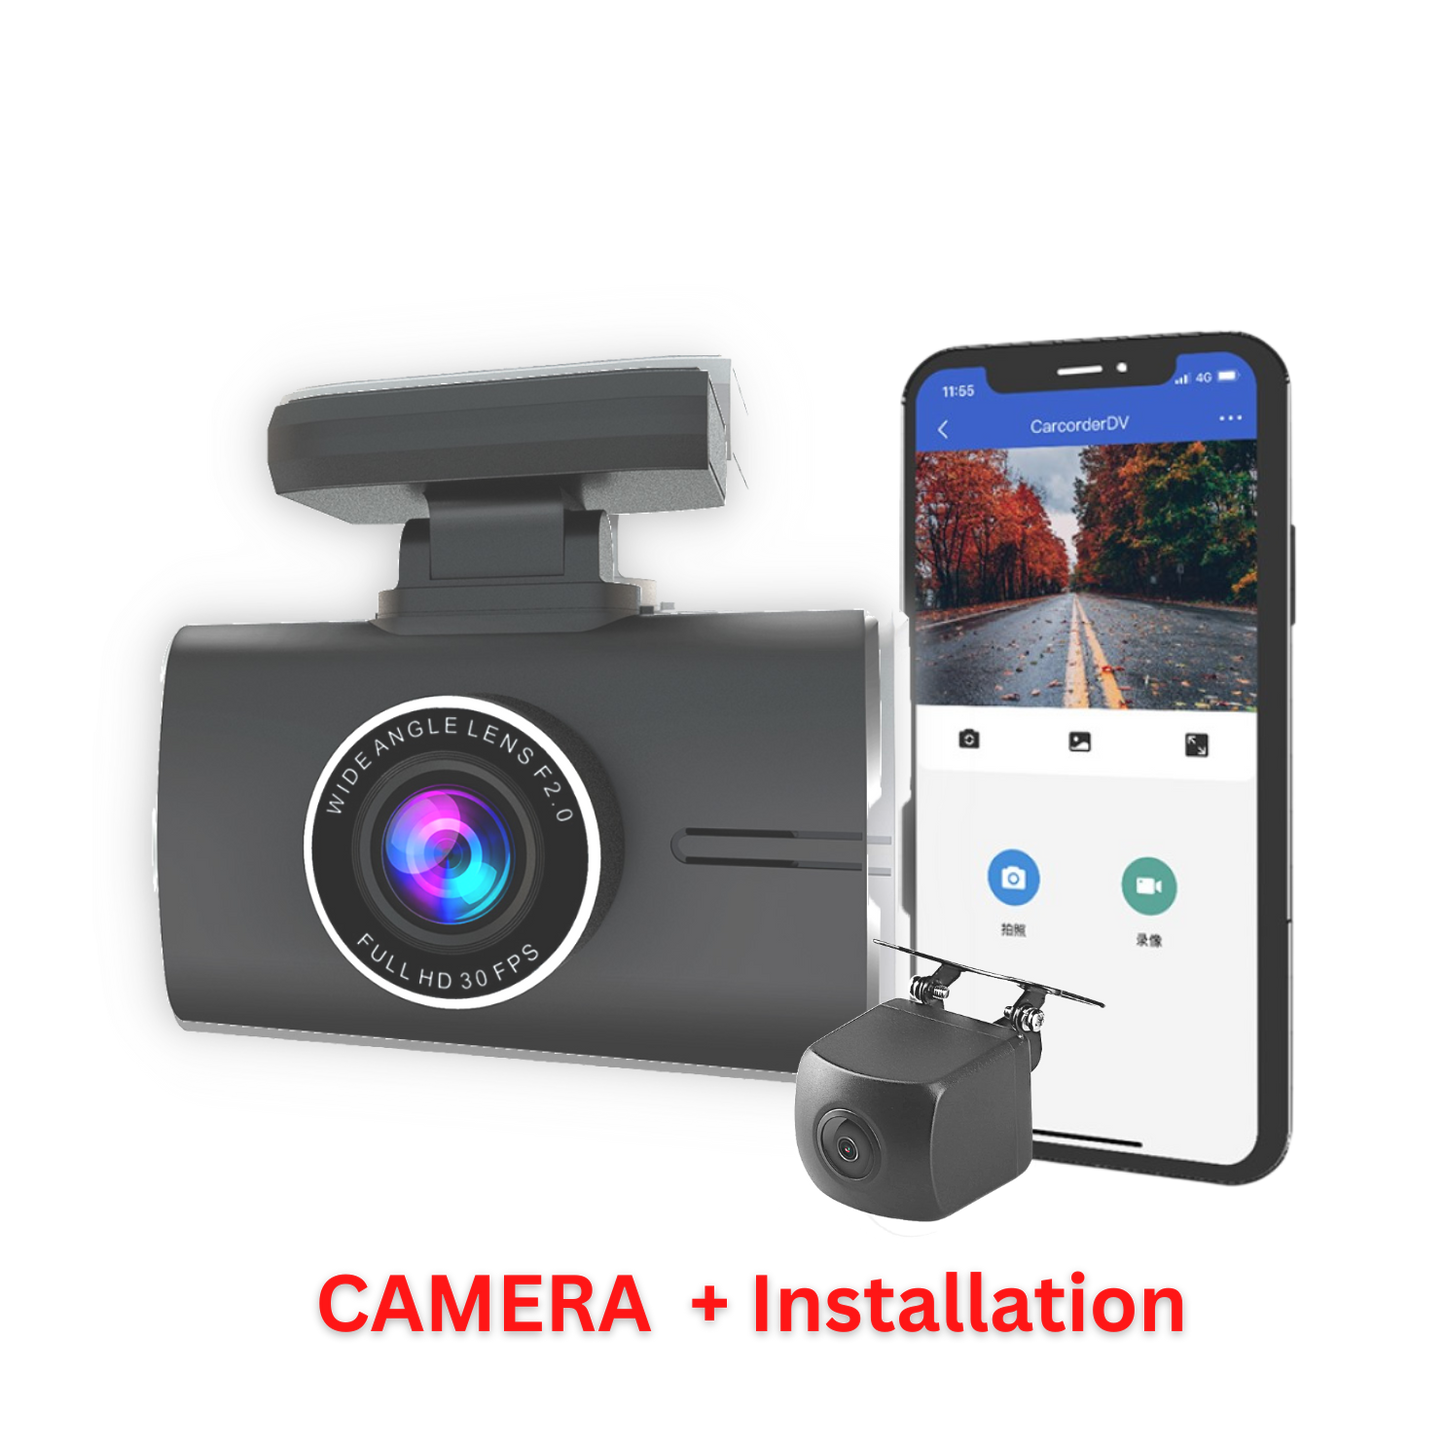 Mojo Car Cam 3 Pro 4K Front and Back HD Car Camera